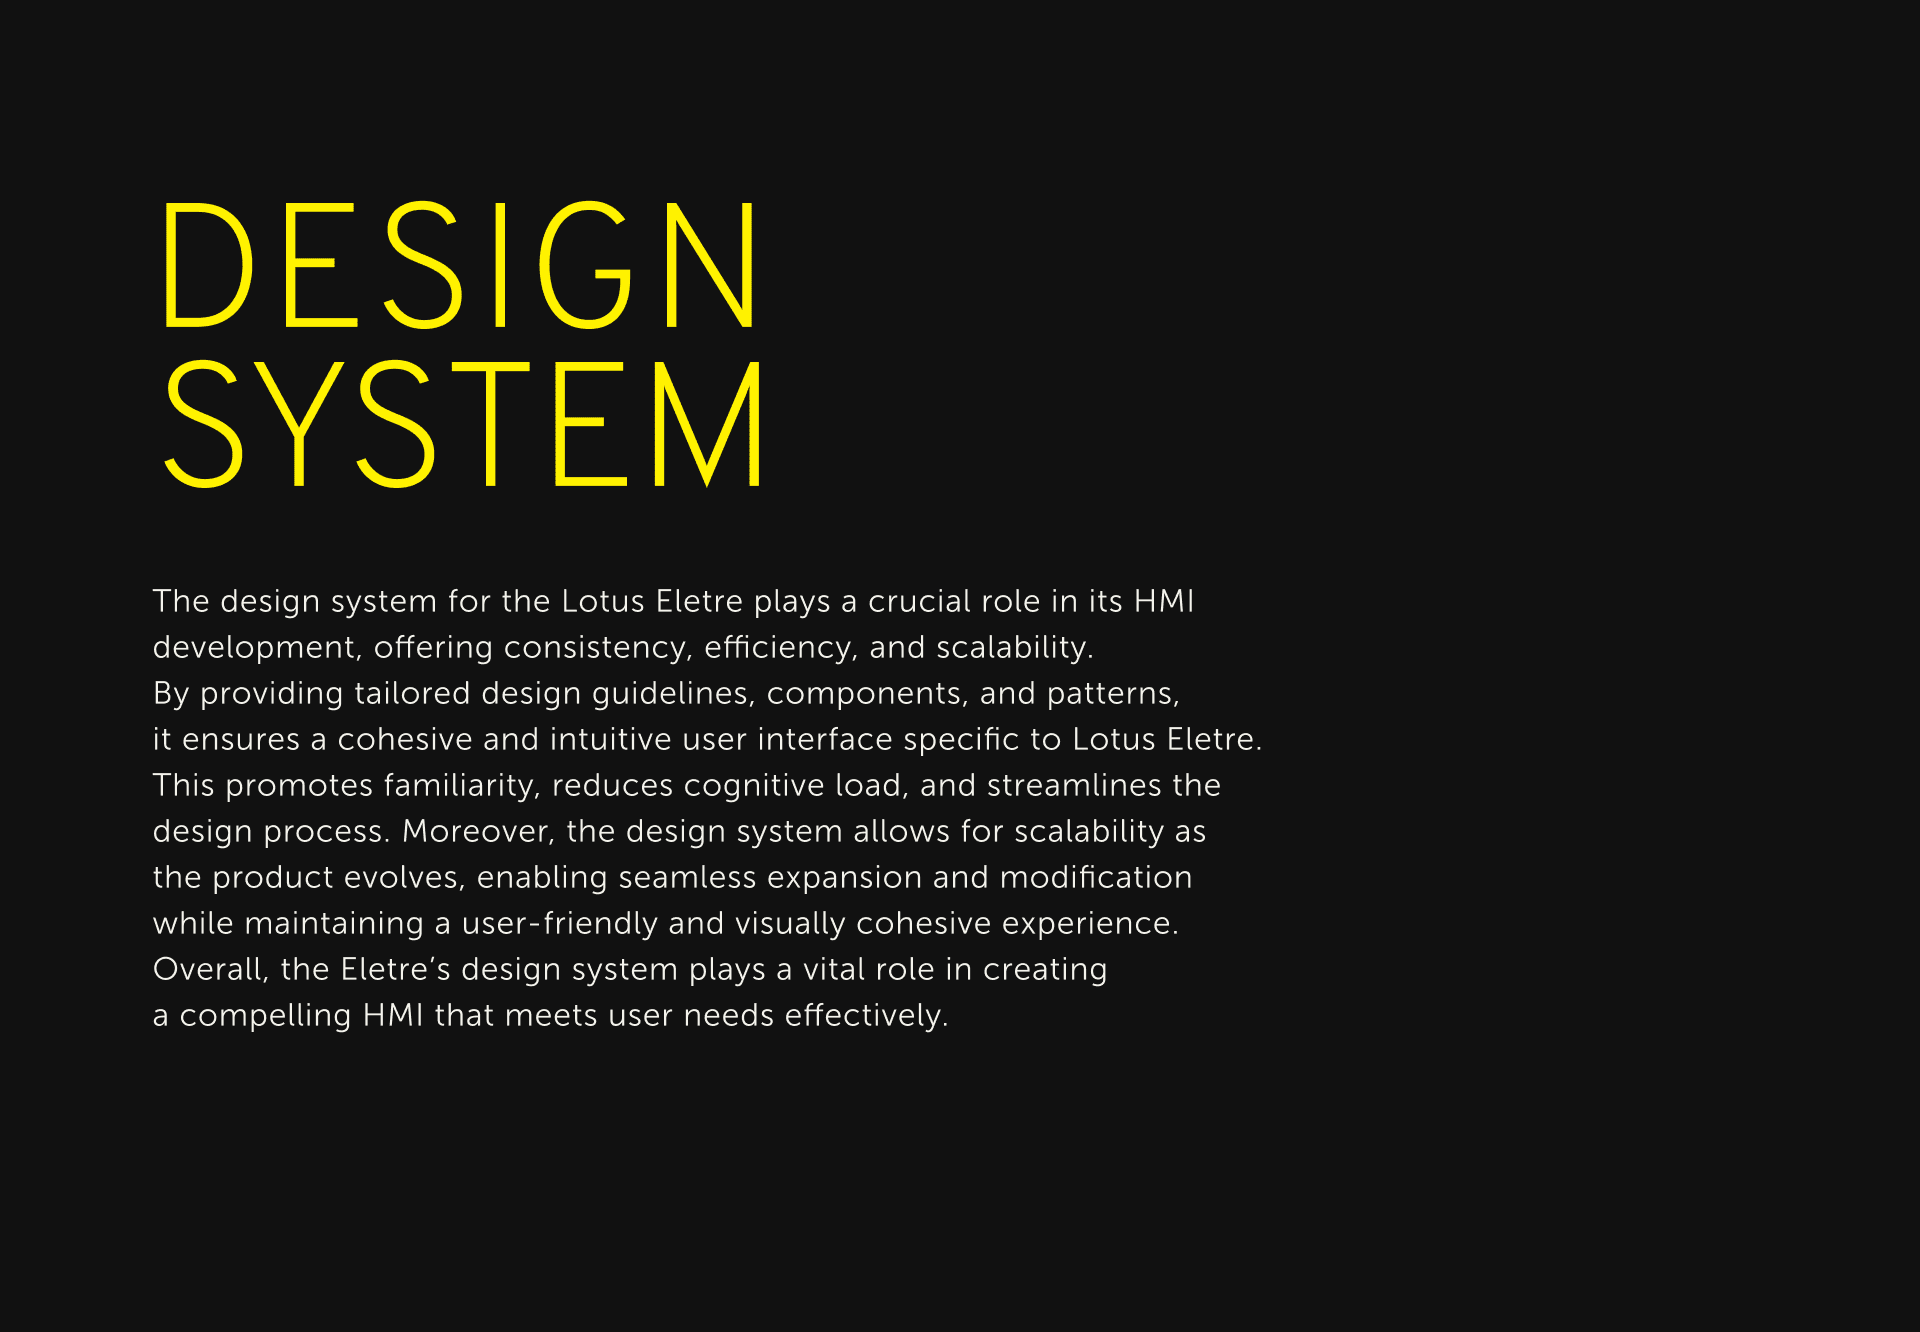 The Lotus Eletre Design System text